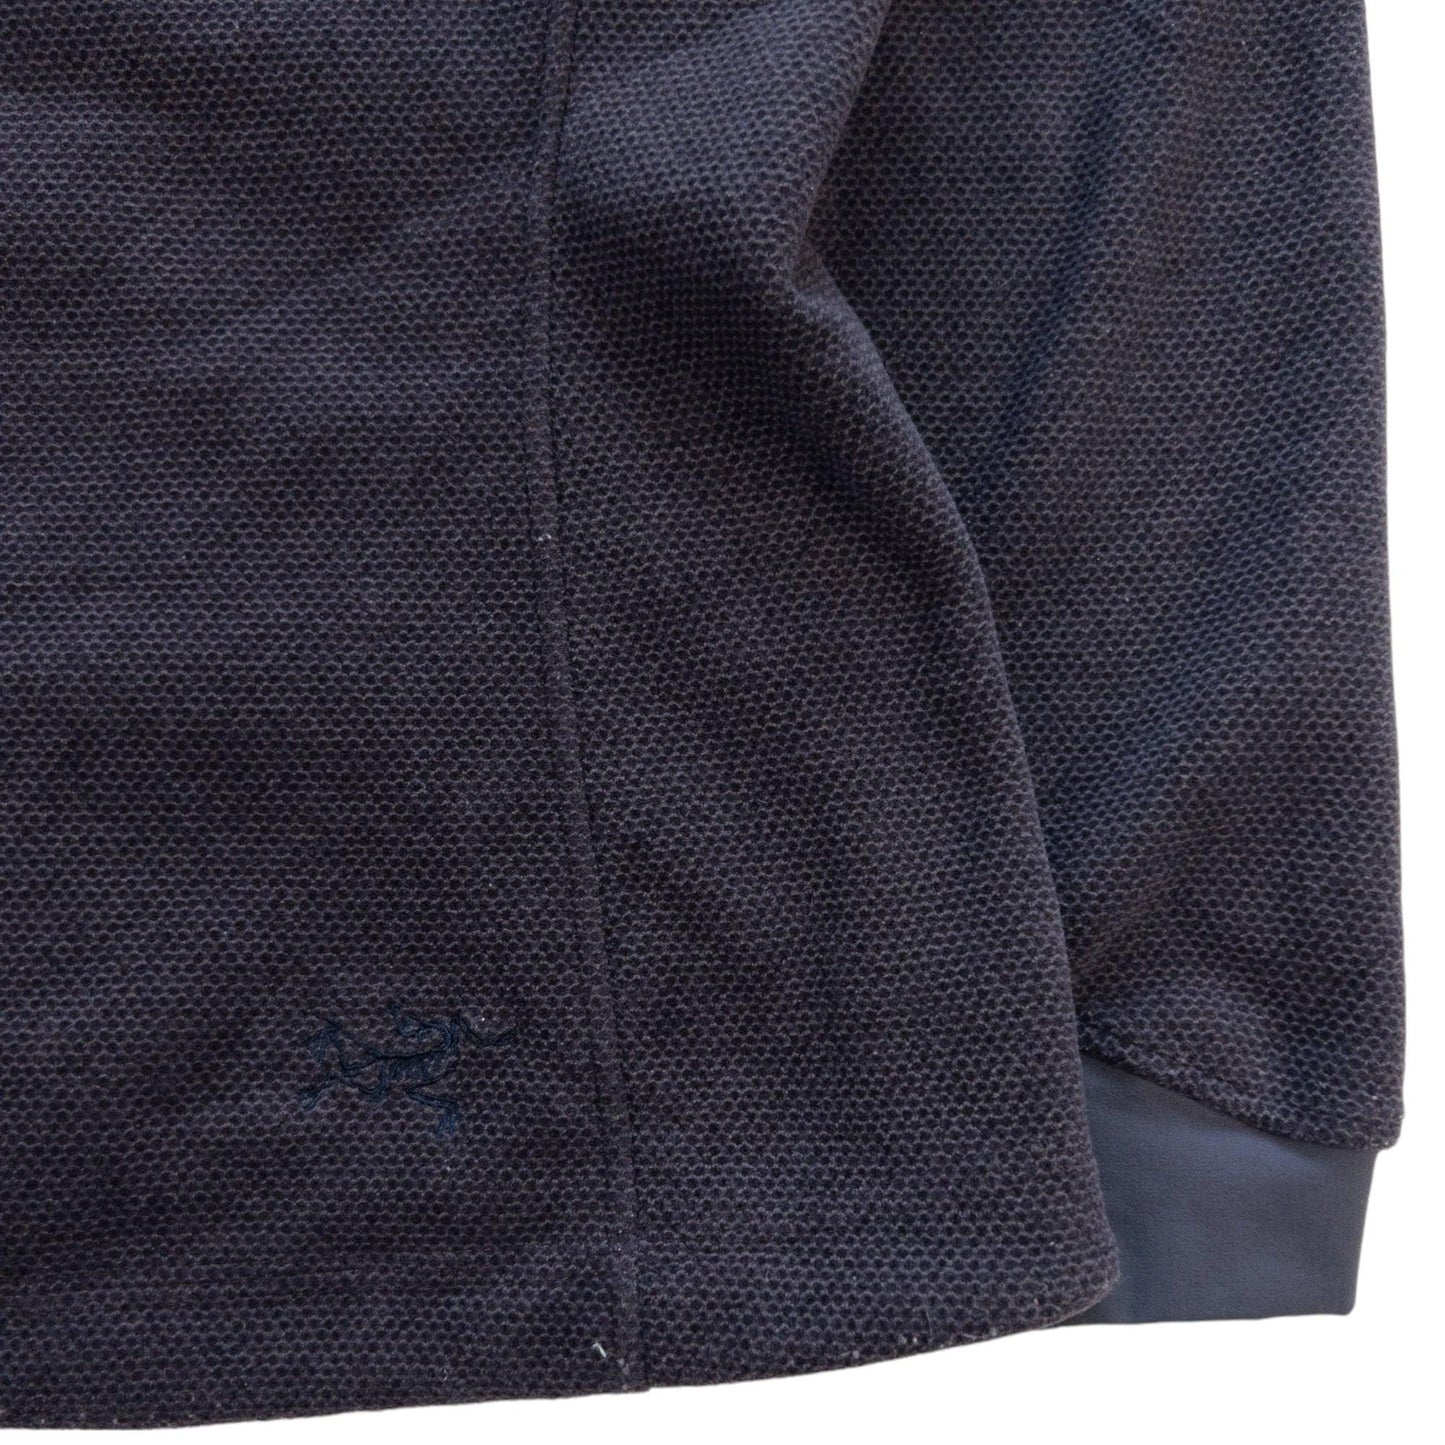 Vintage Arcteryx Fleece Zip Up Jacket Women's Size XS - Known Source